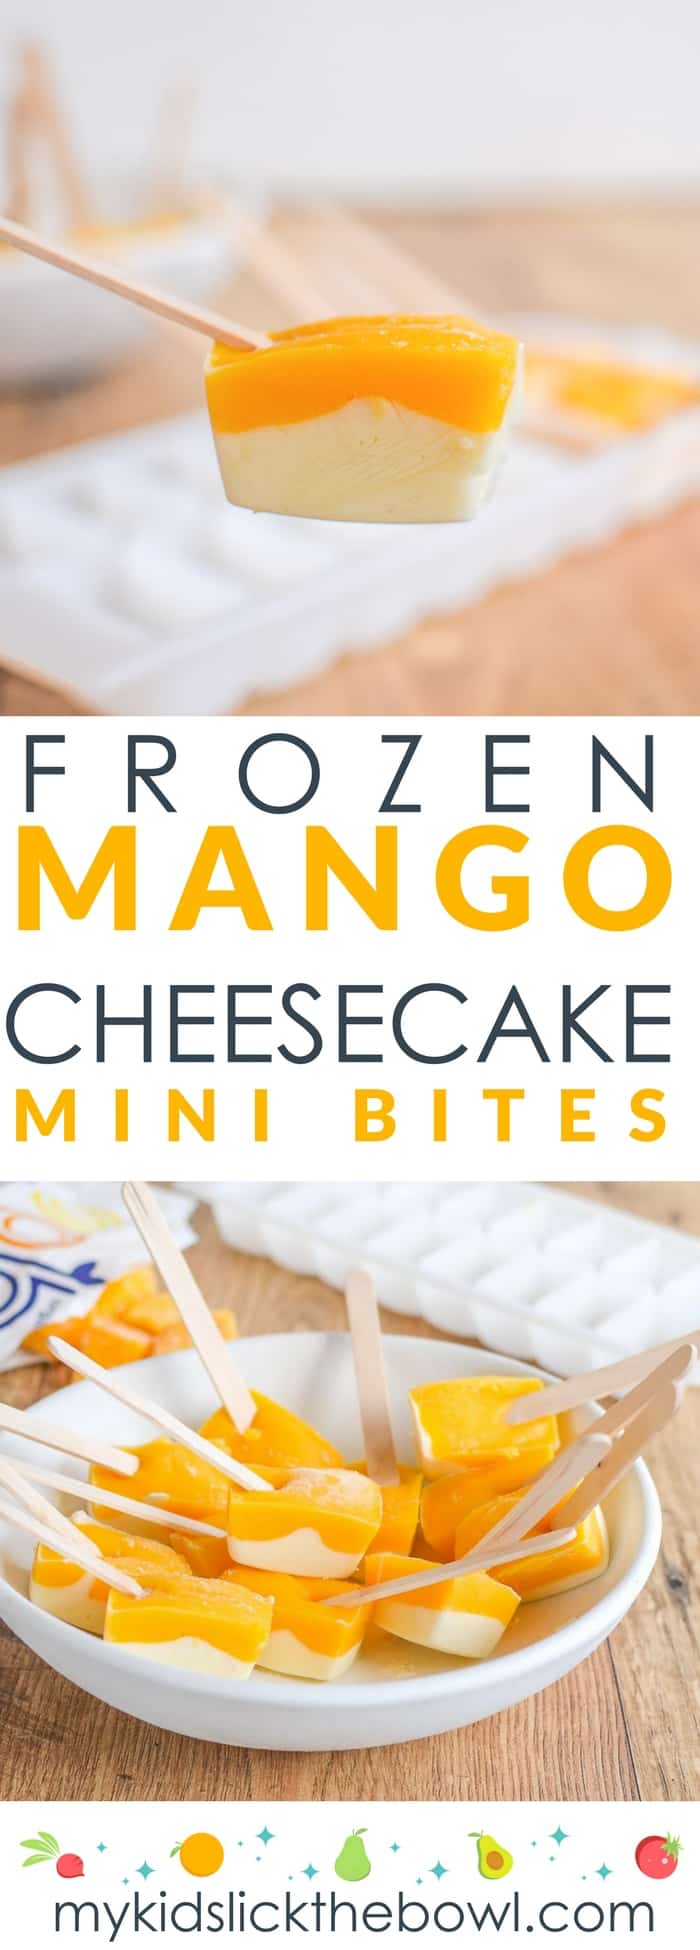 Frozen mango cheesecake bites, healthy dessert idea, easy, fun kid friendly 4 ingredients